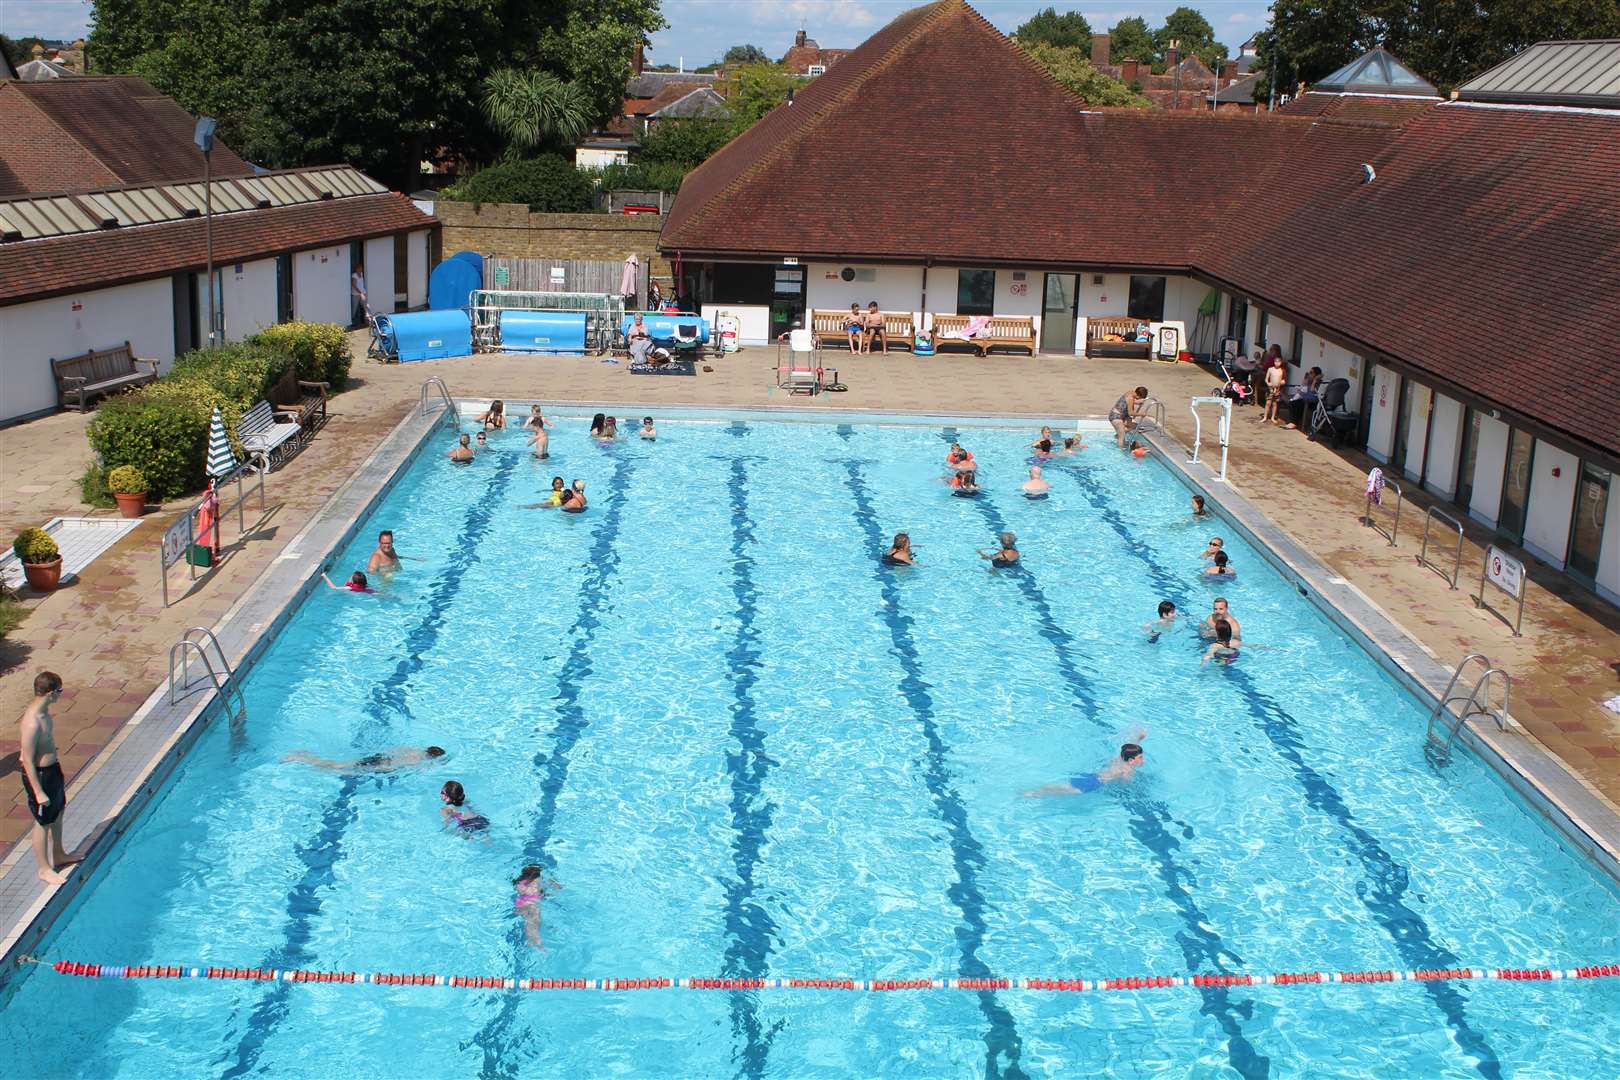 Faversham Pools will reopen next summer